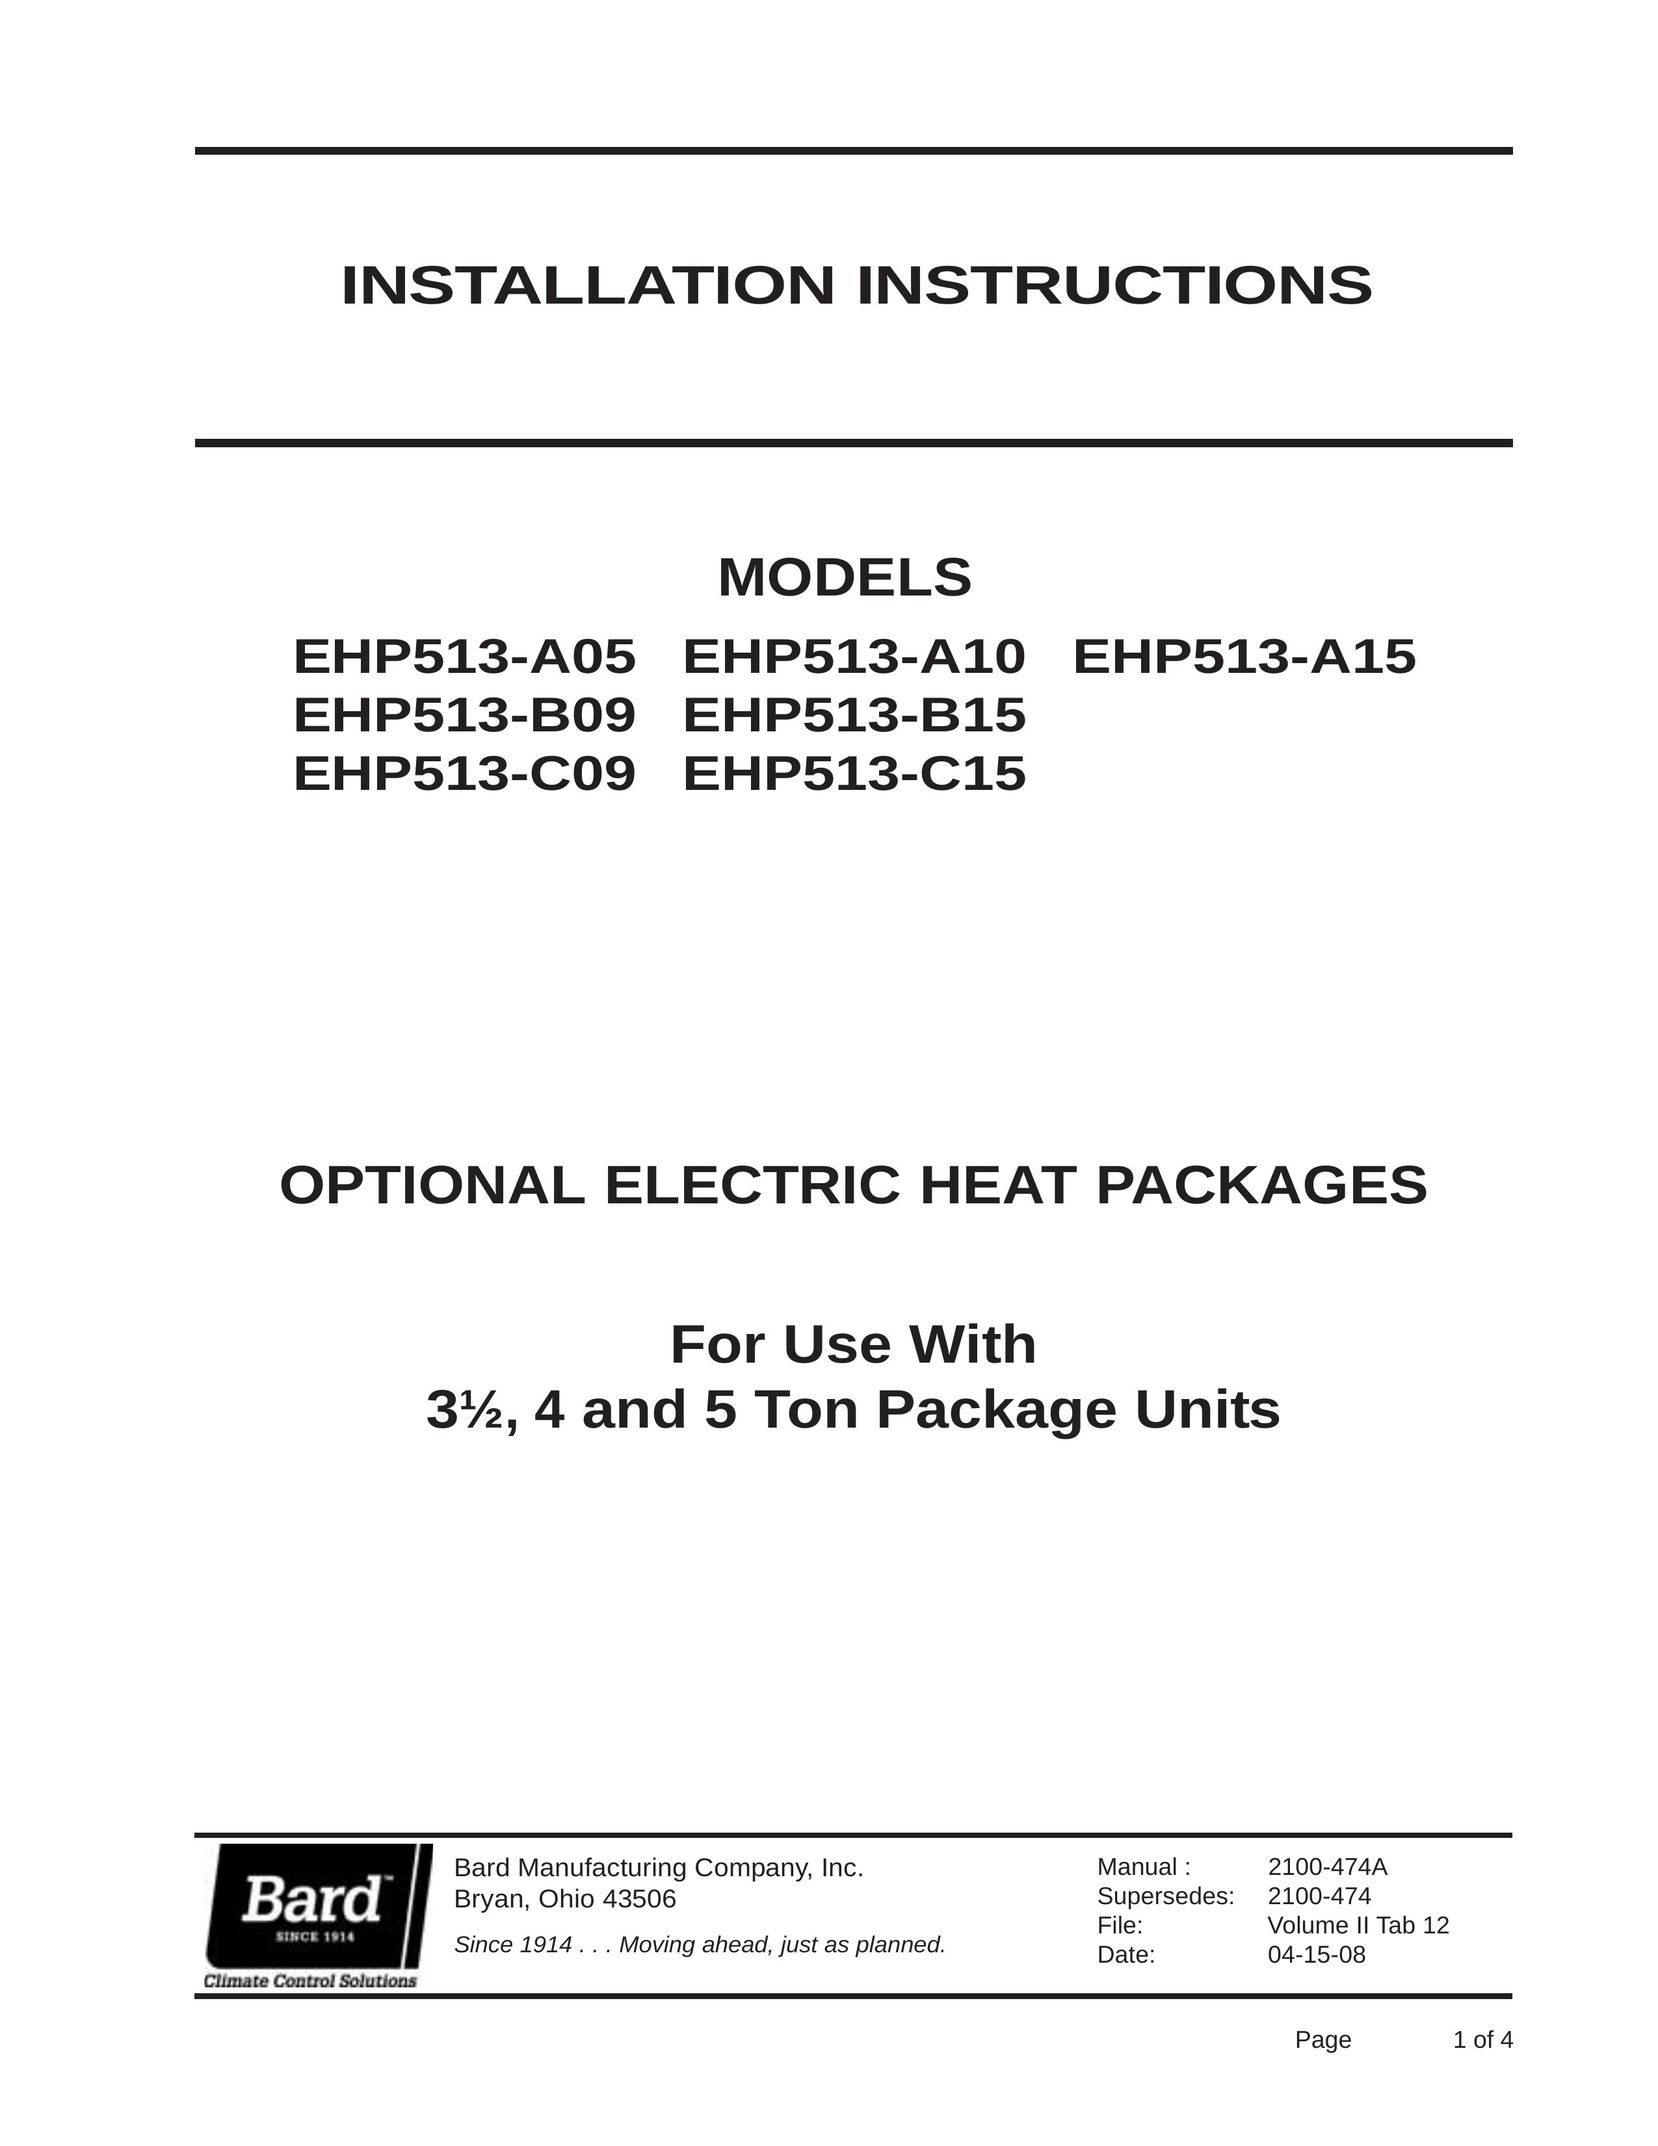 Bard EHP513-B15 Heating System User Manual